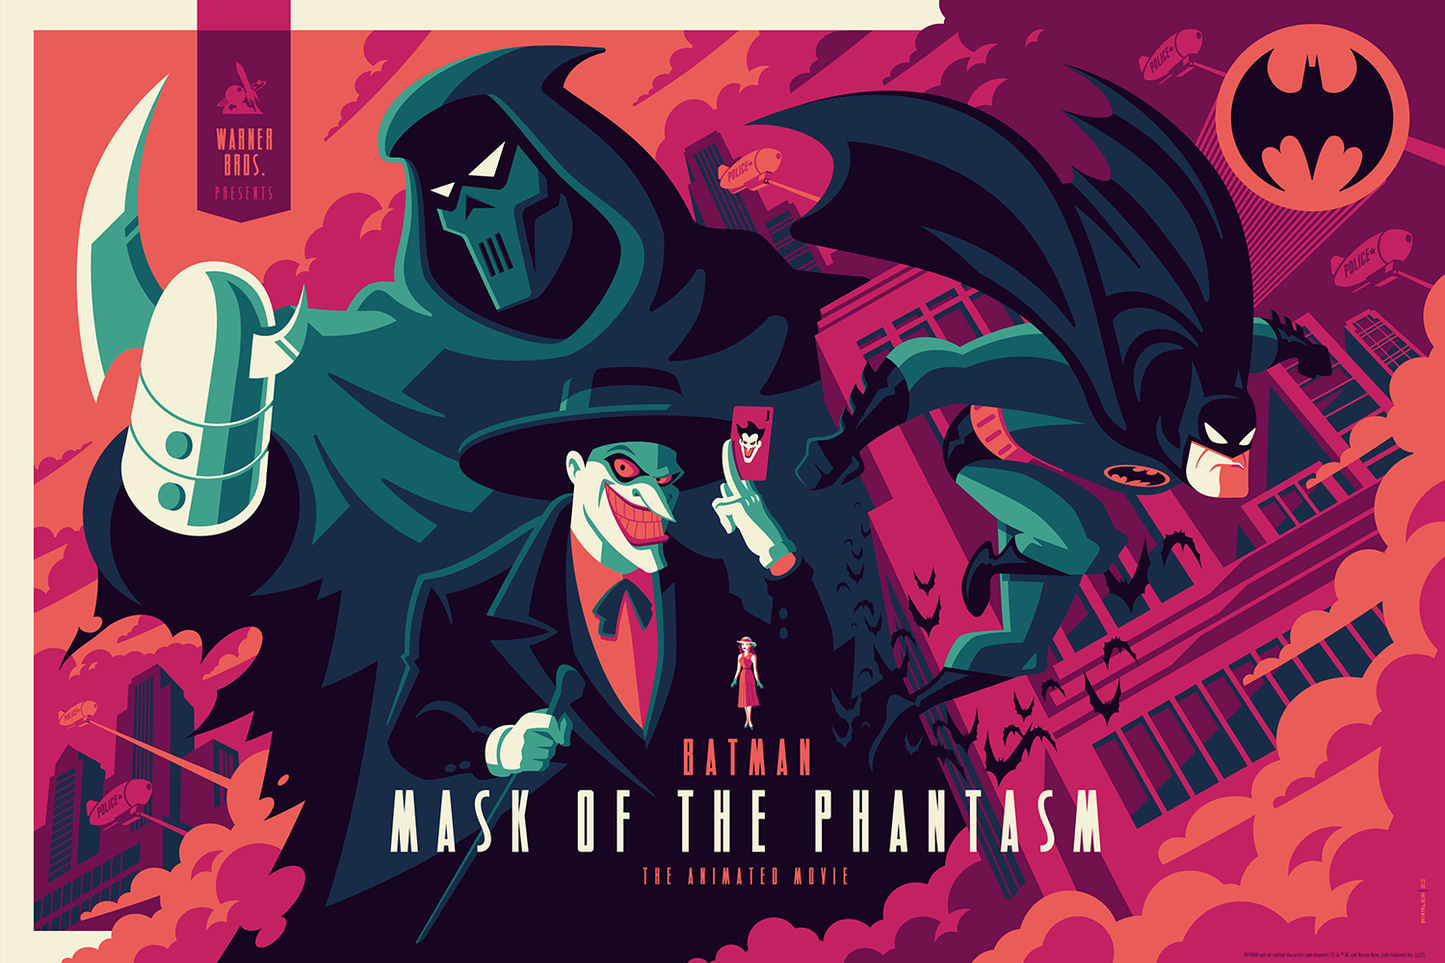 Tom Whalen "Batman: Mask of the Phantasm" Variant